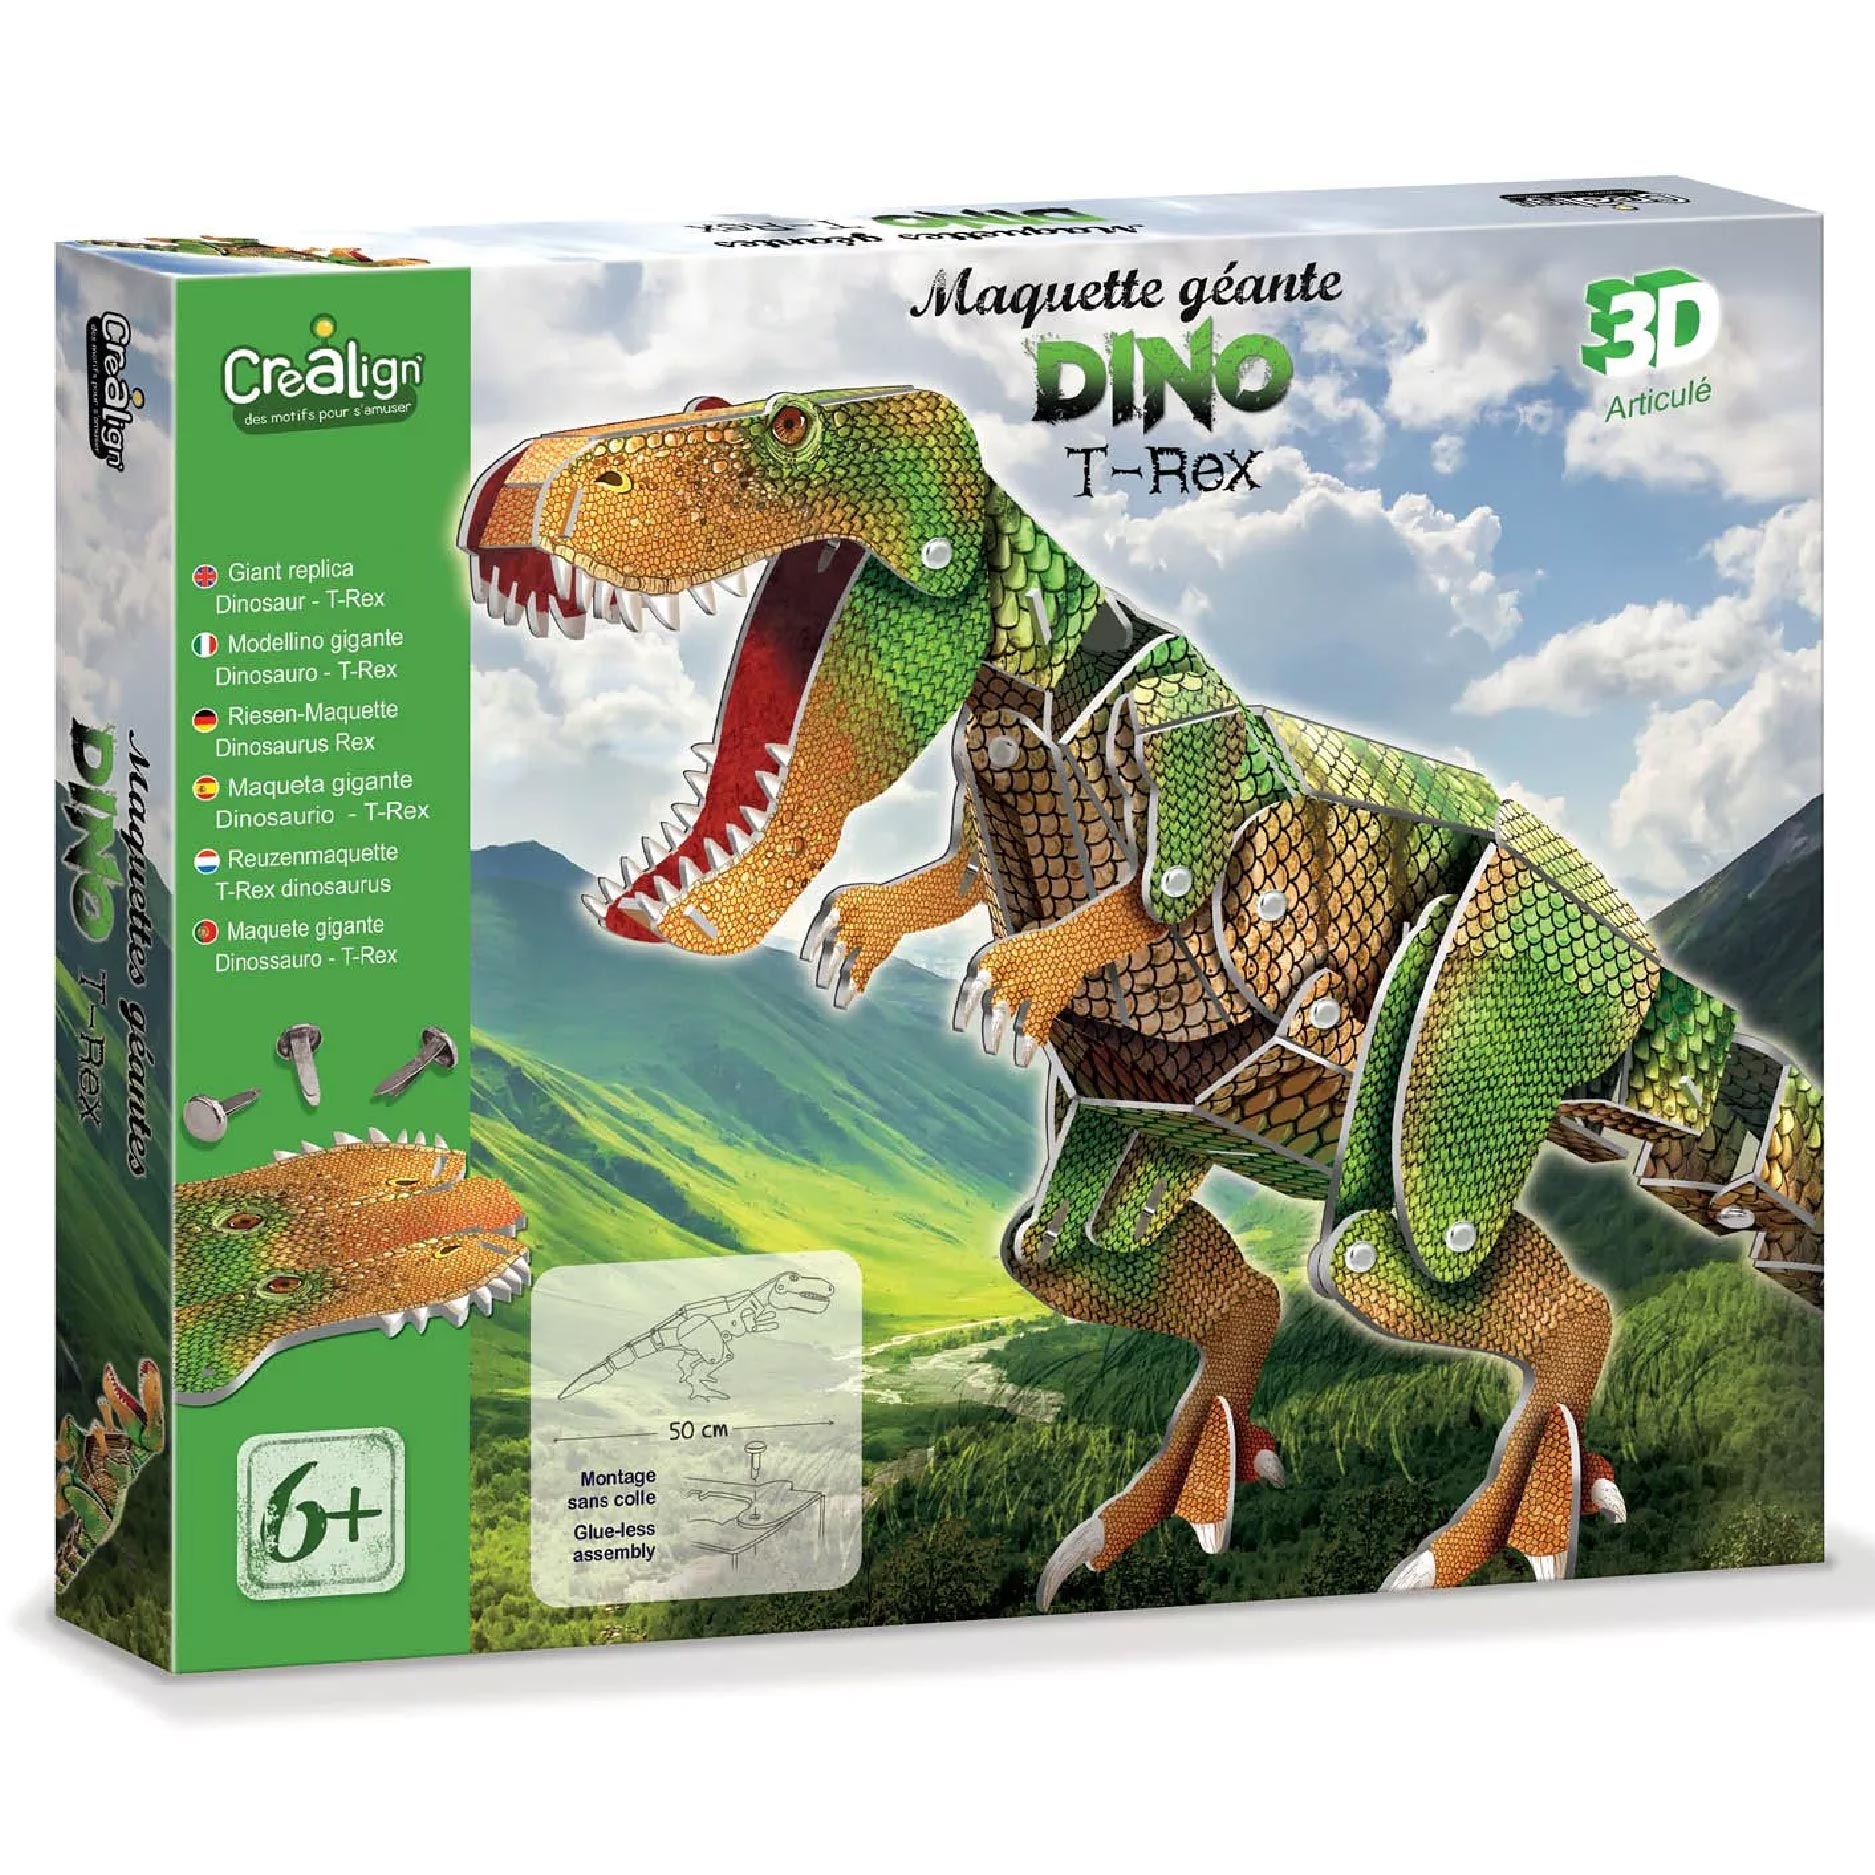 Macheta gigantică dinozaur T-Rex